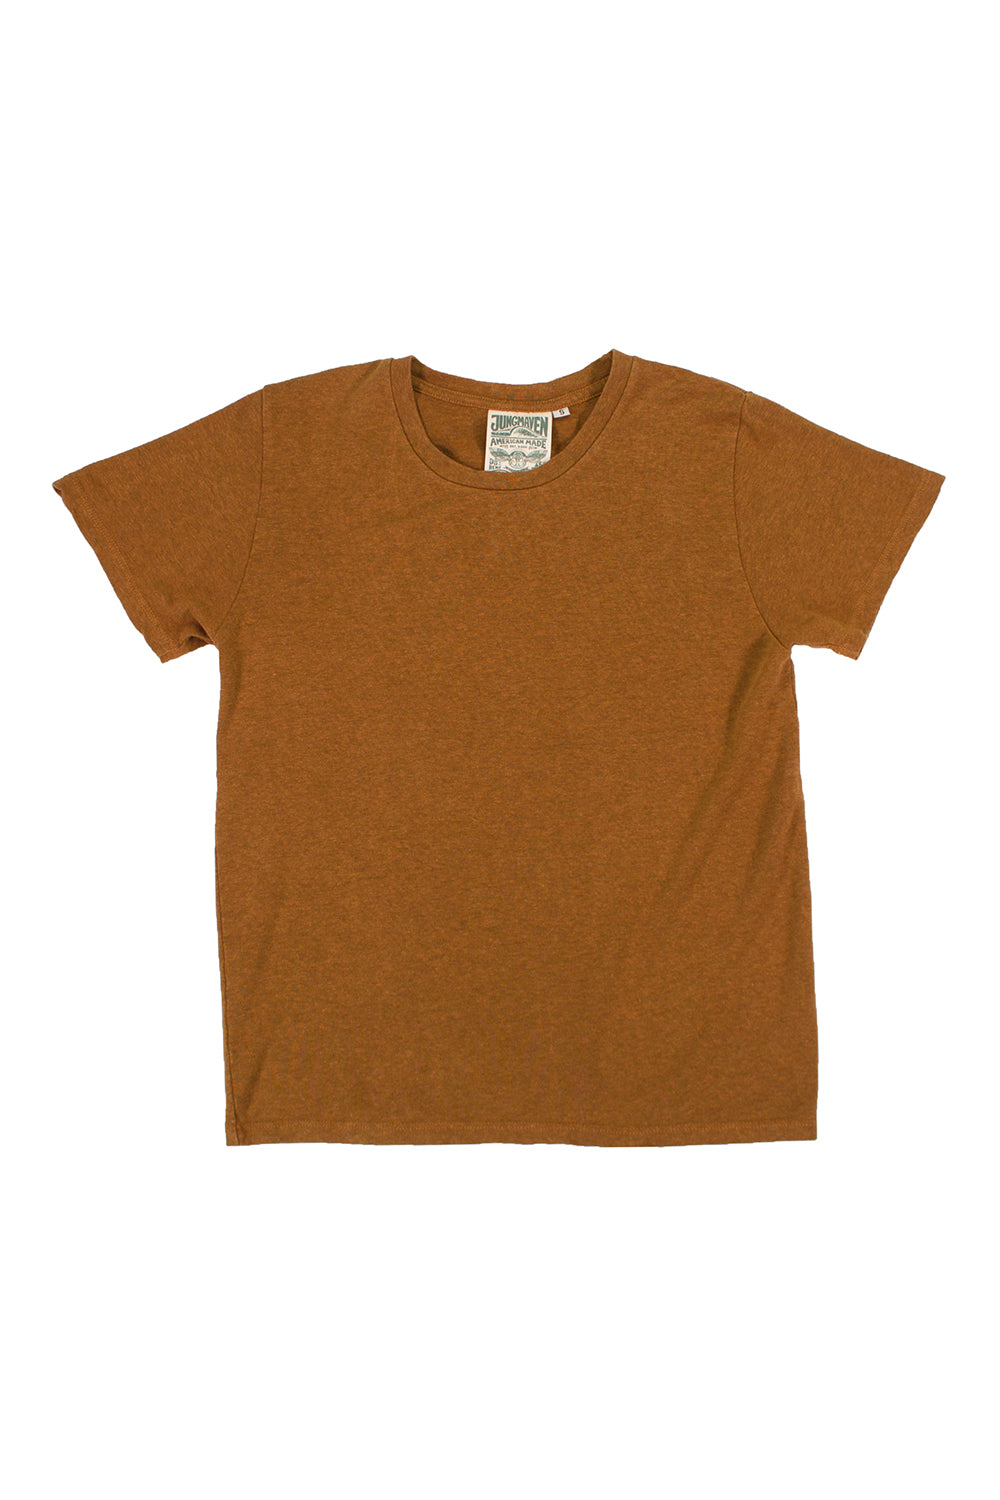 Kids Merino Wool Thermal Underwear Short Sleeve T-shirt Tee -  Canada